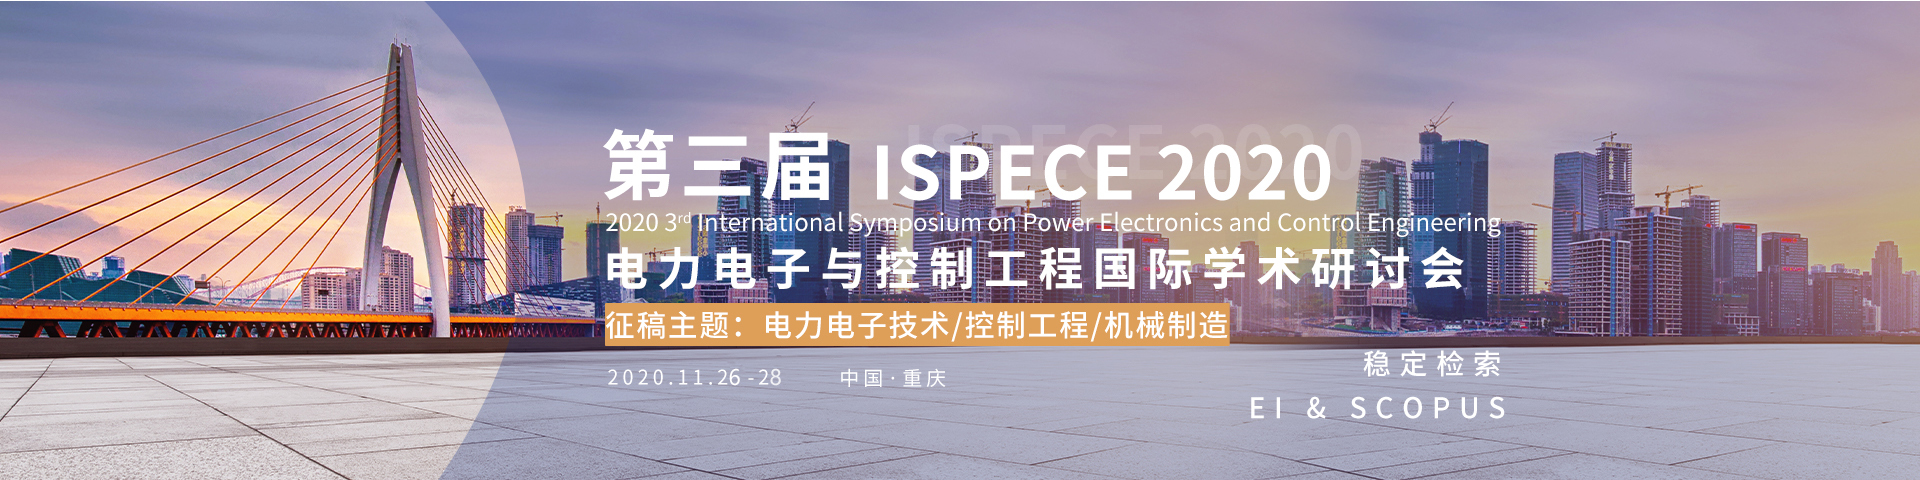 ISPECE 2020会议建网中文版修改-1024.jpg